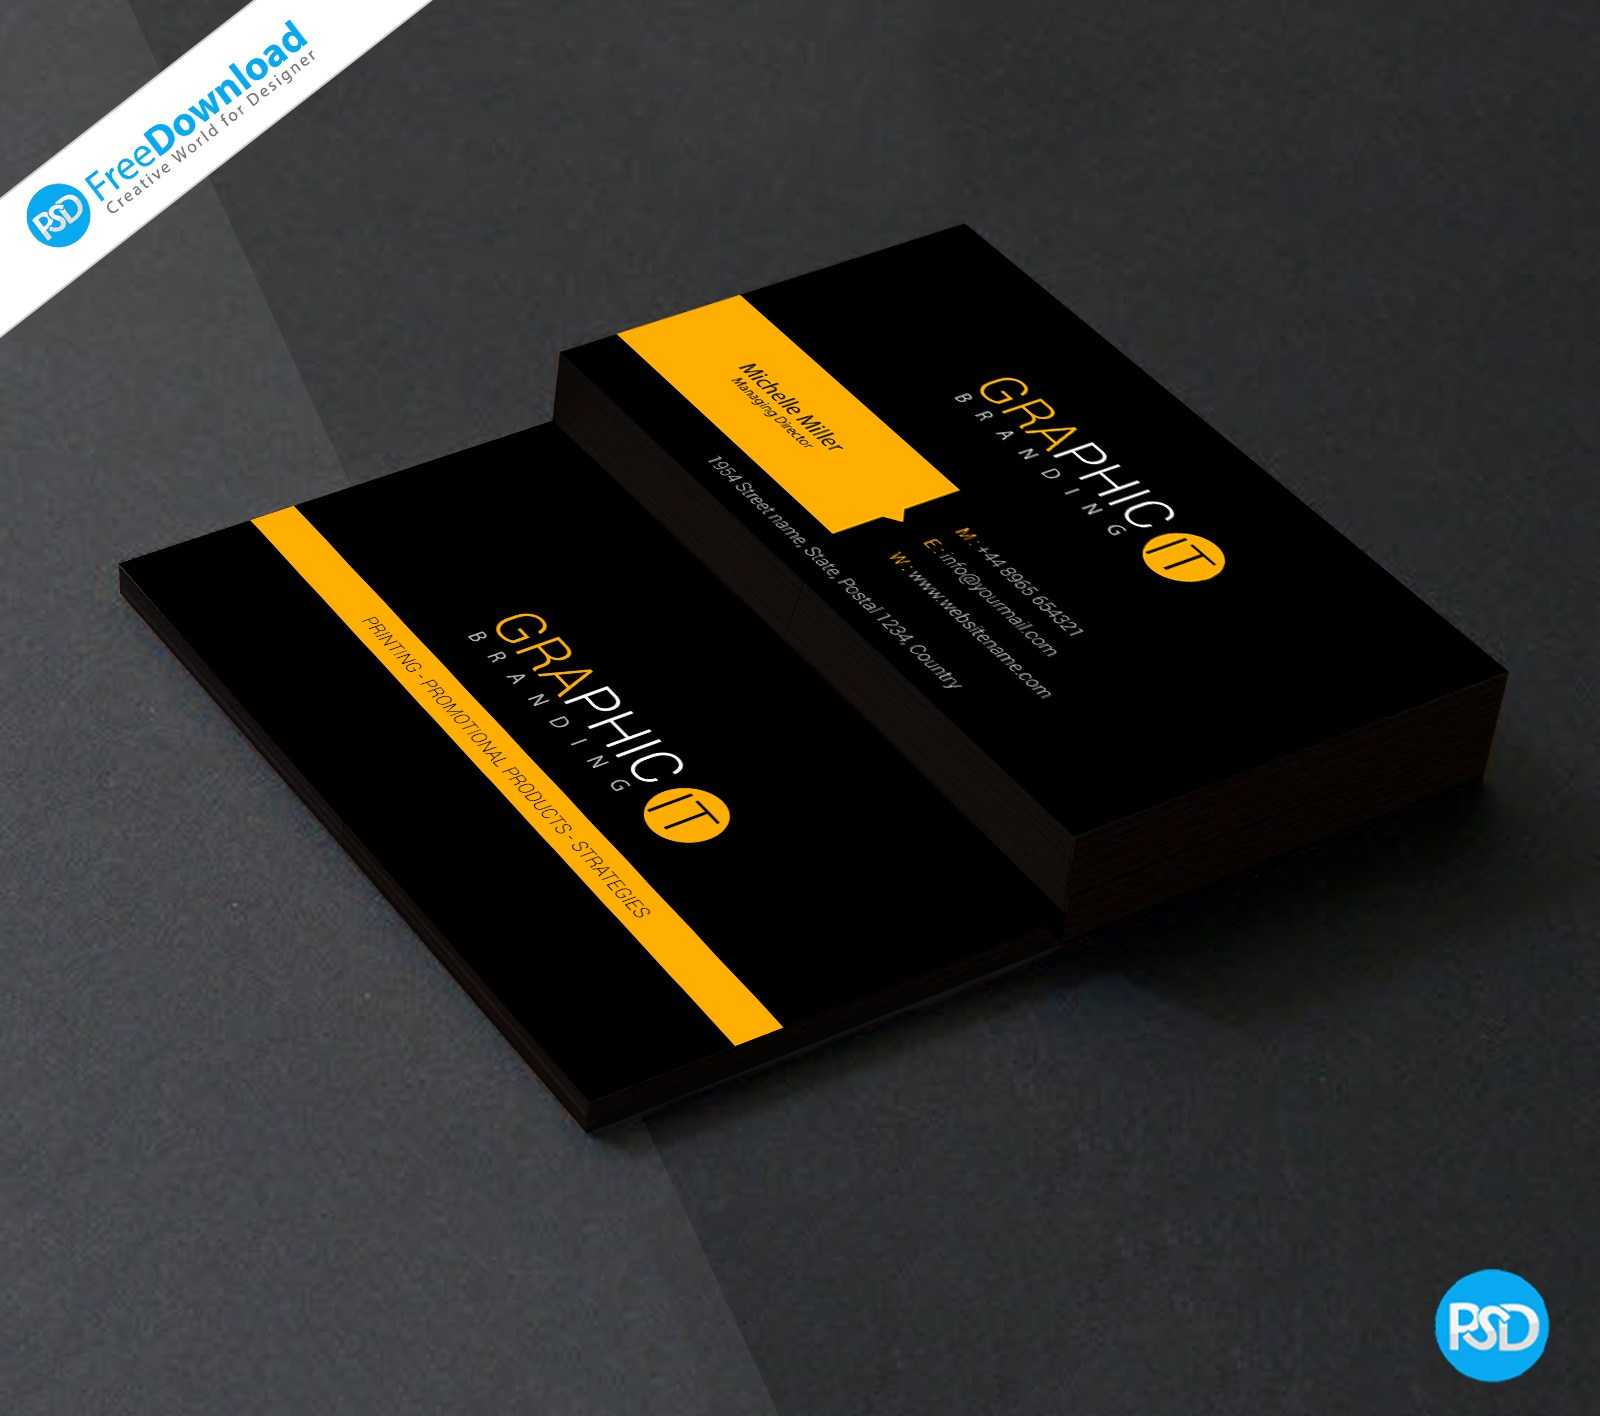 011 Psd Business Card Templates Photography Visiting Design For Visiting Card Template Psd Free Download